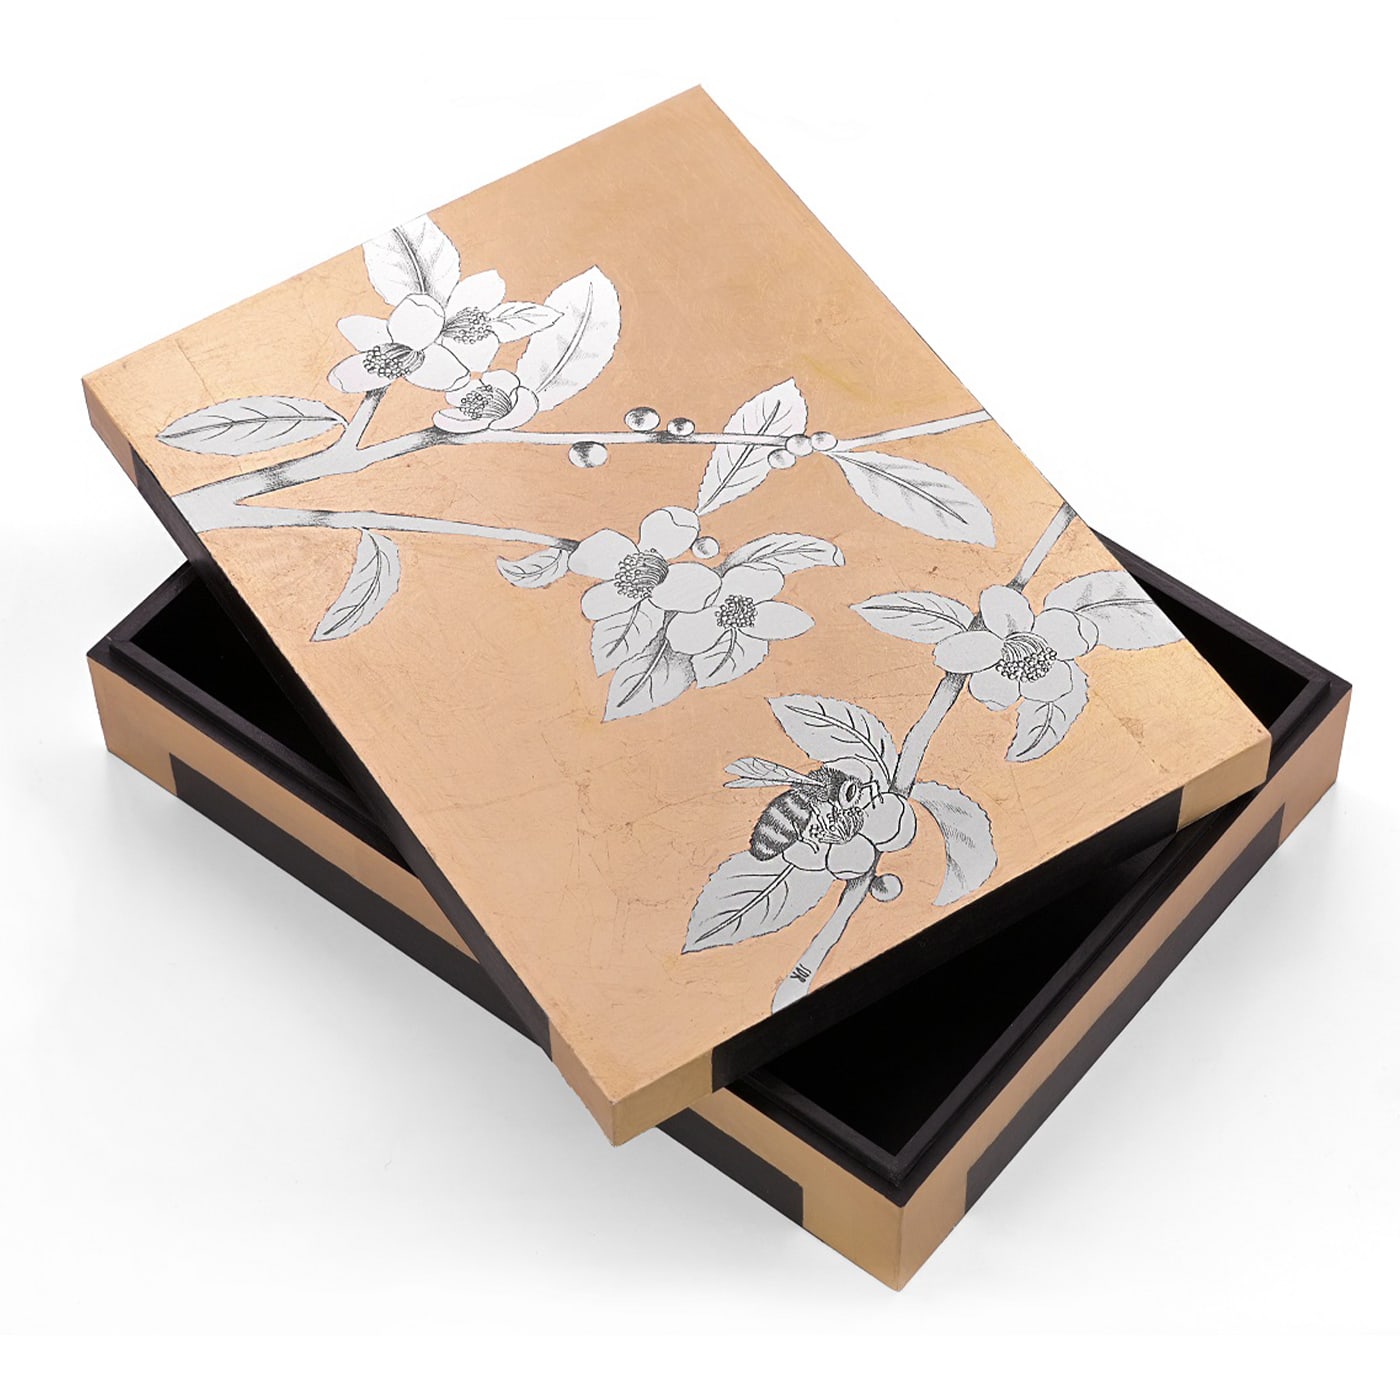 Casarialto Atelier Bee in a golden Sky box by Stefania Dei Rossi - Casarialto